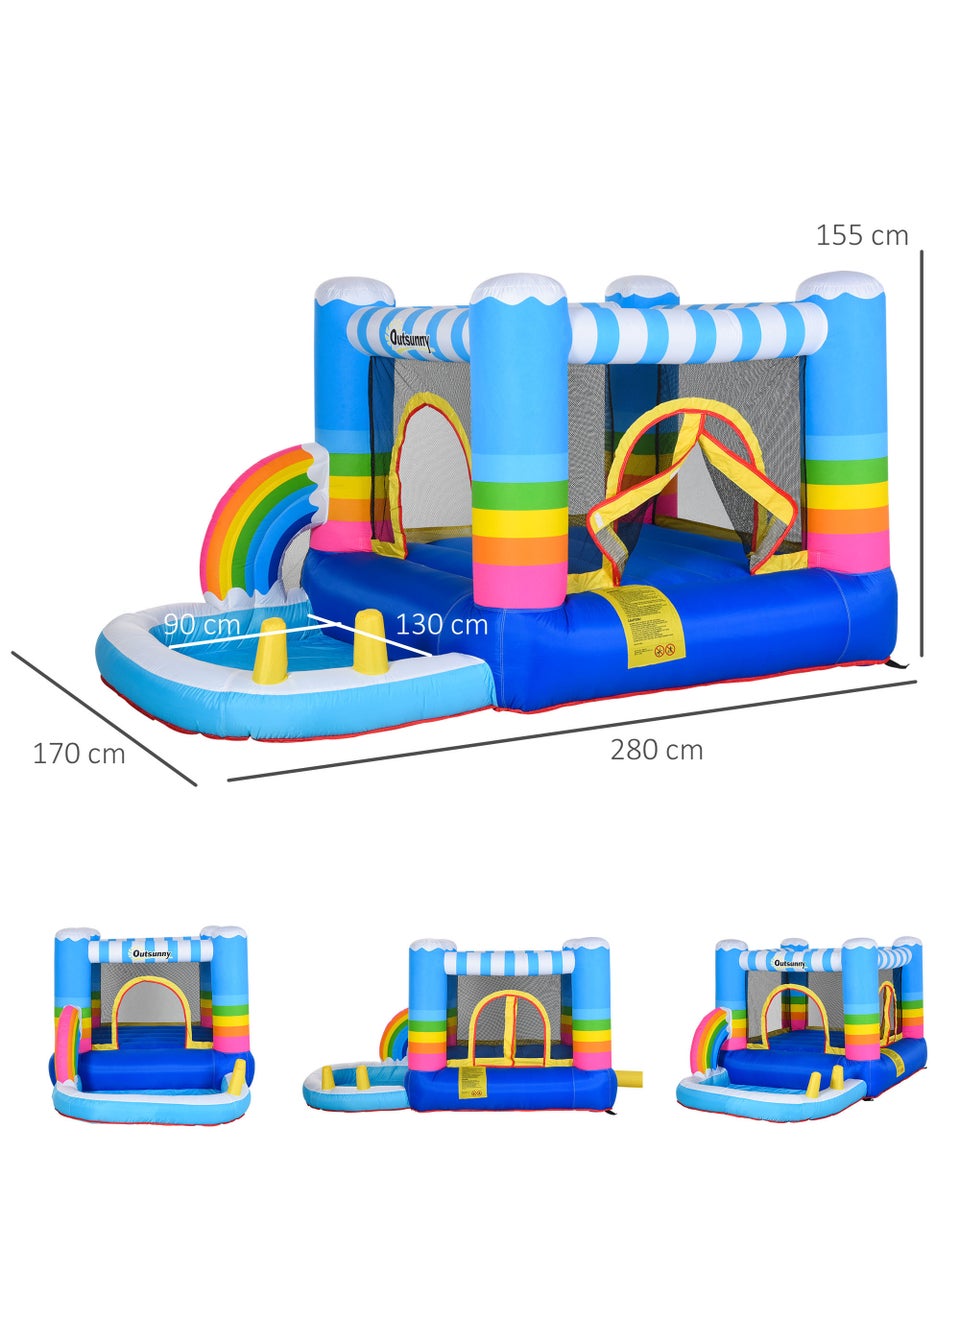 Outsunny Inflatable Rainbow Bouncy Castle (155cm x 280cm x 170cm)